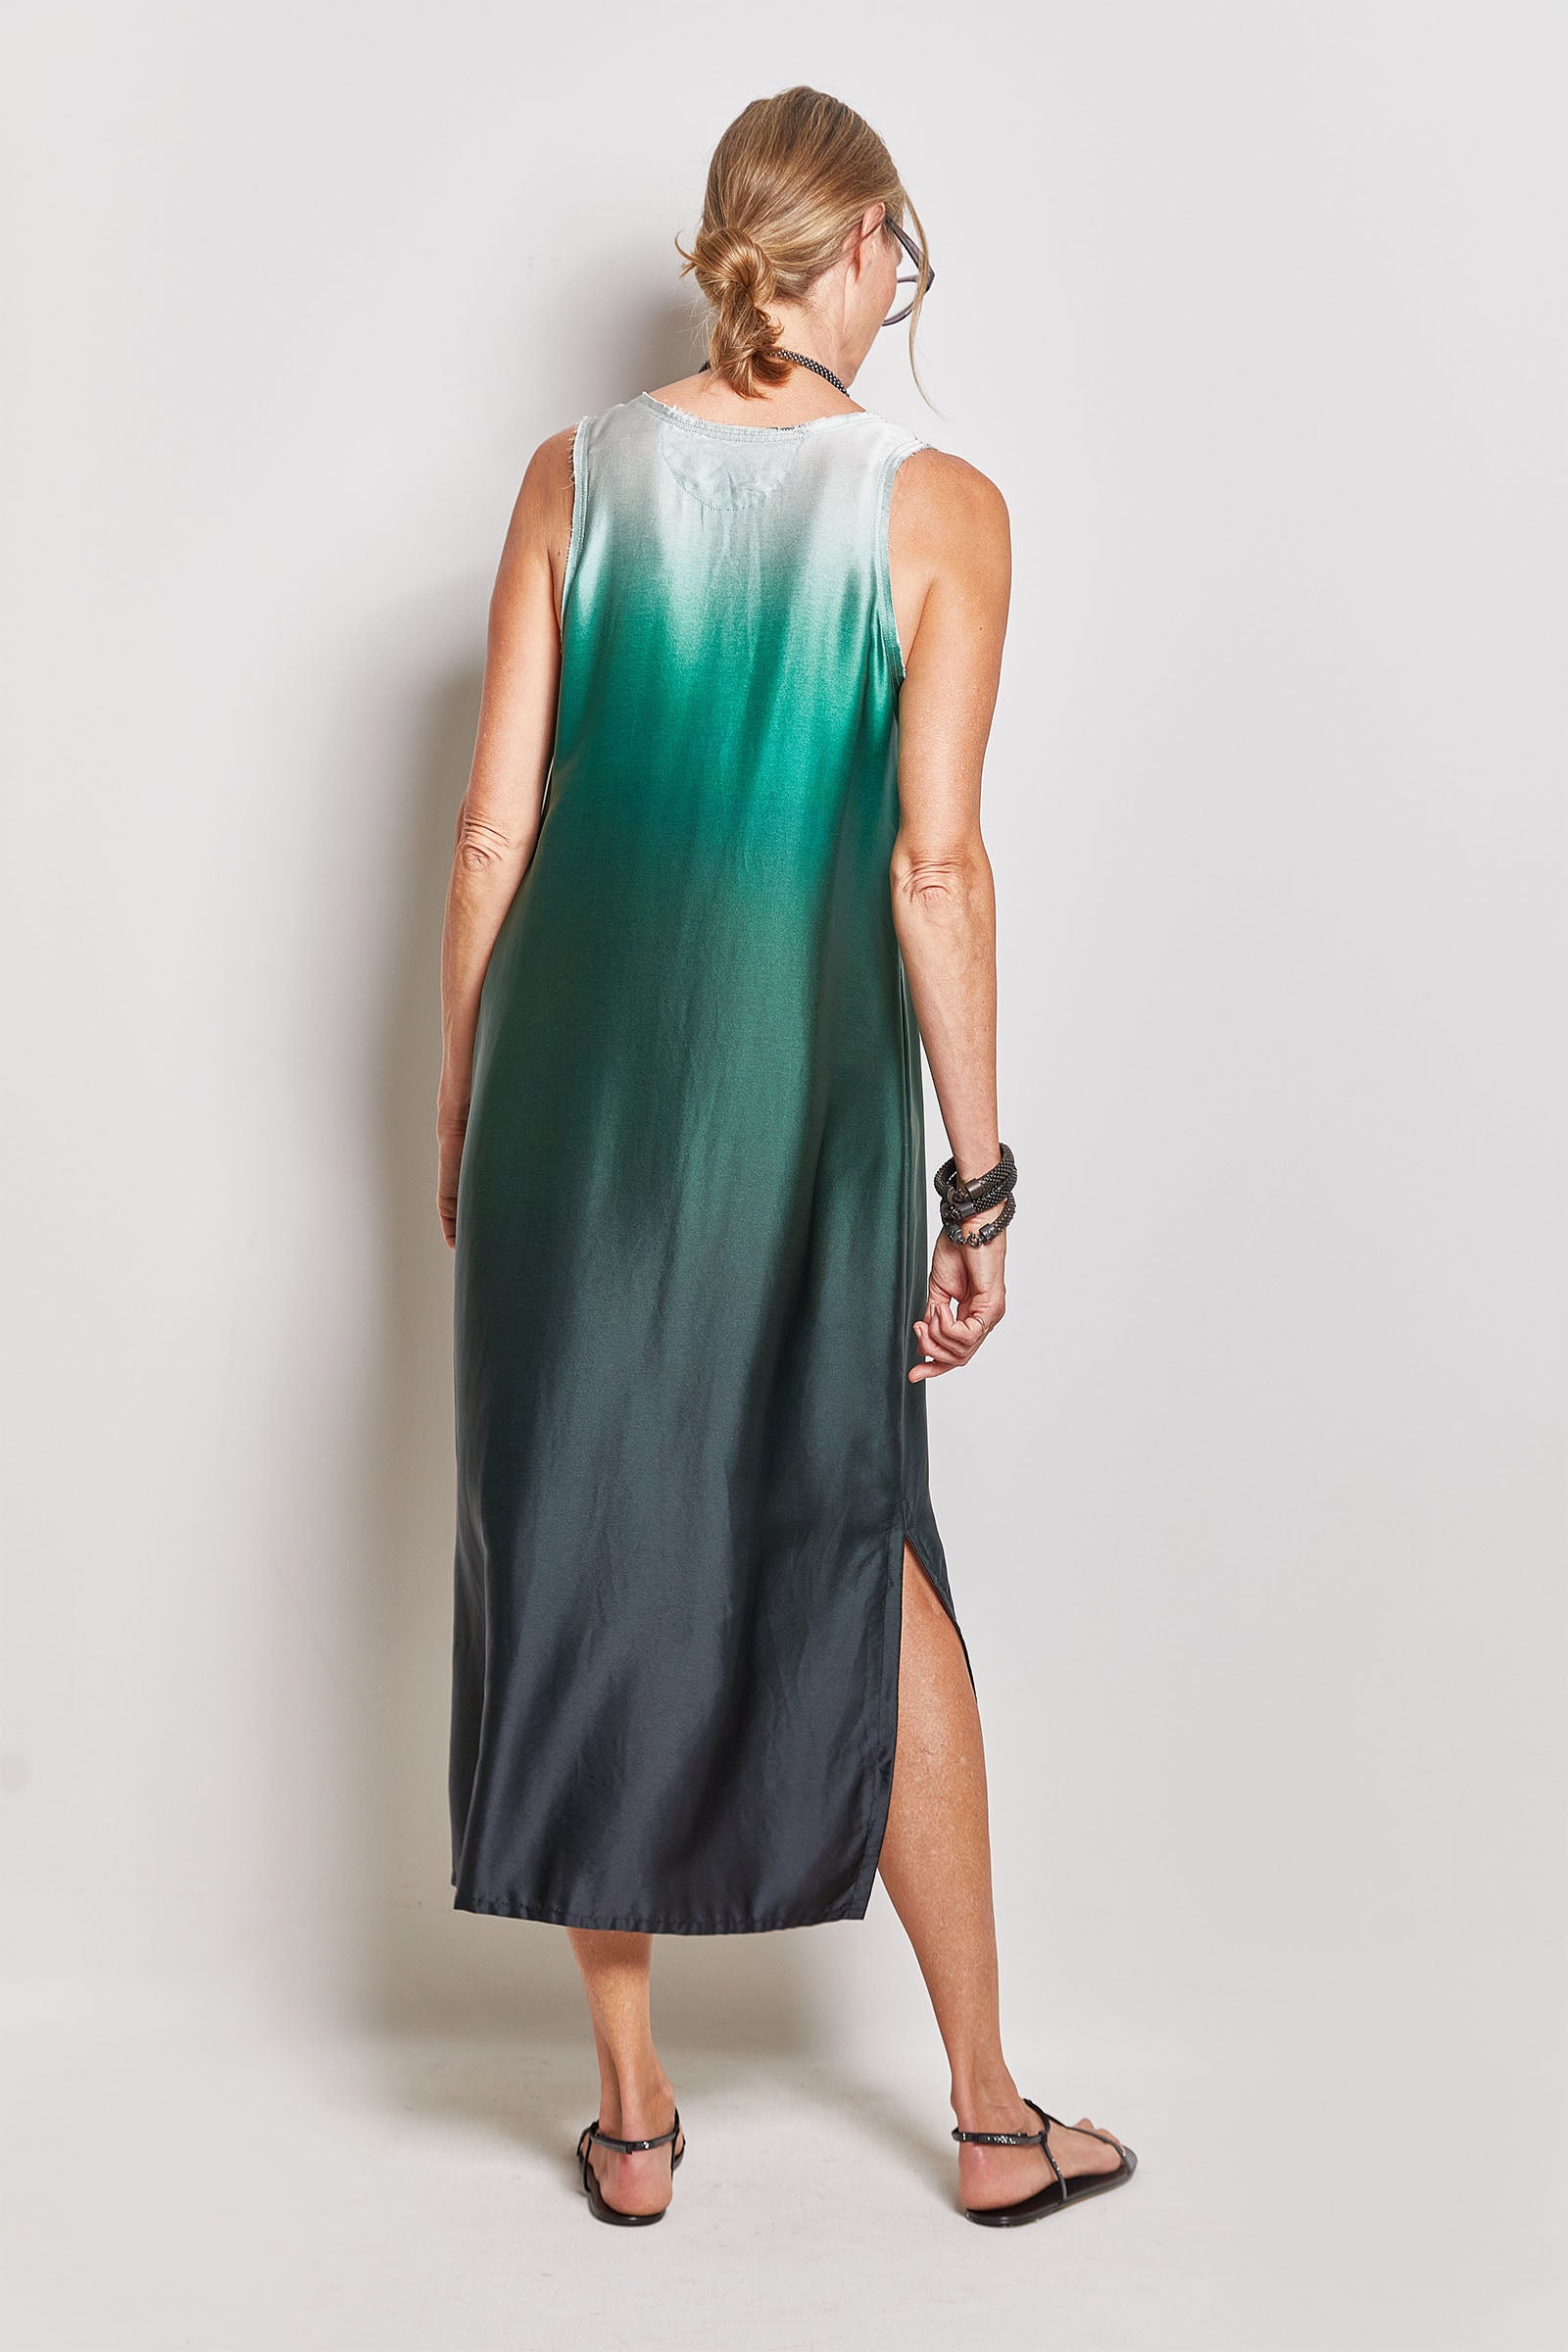 byfreer peignoir dark ombré silk maxi dress.